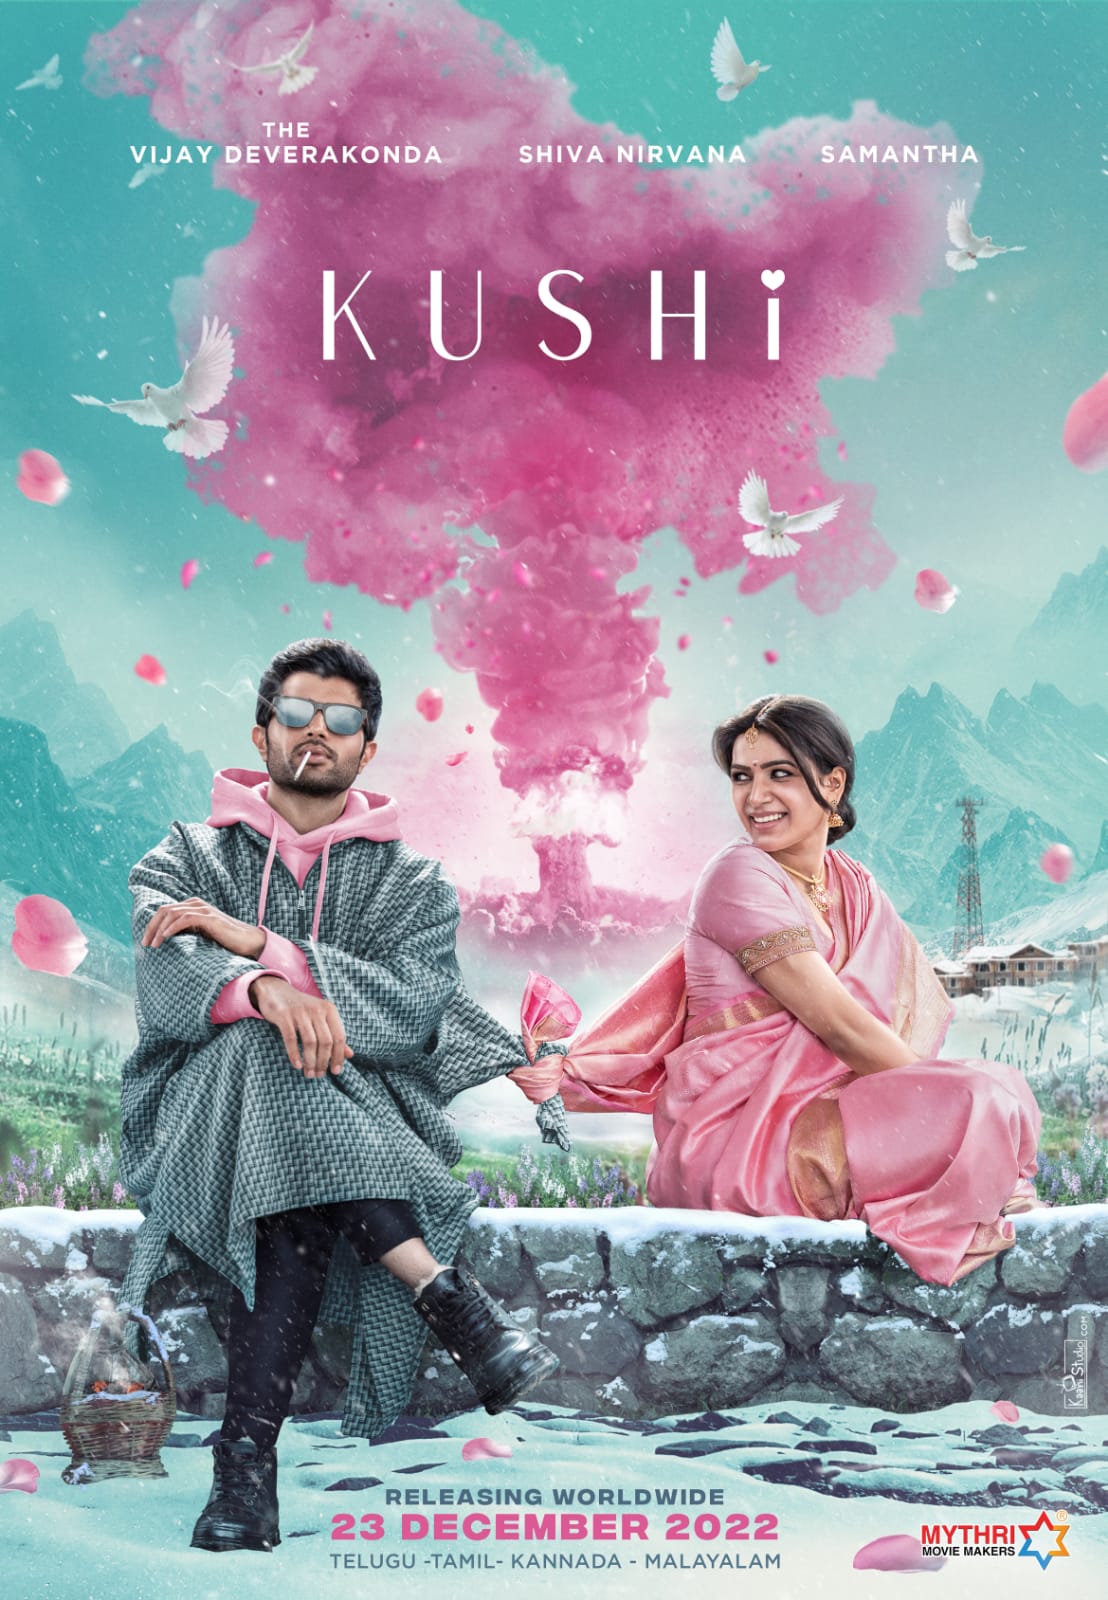 Samantha Vijay Devarakonda Kushi Movie First Look Poster Released